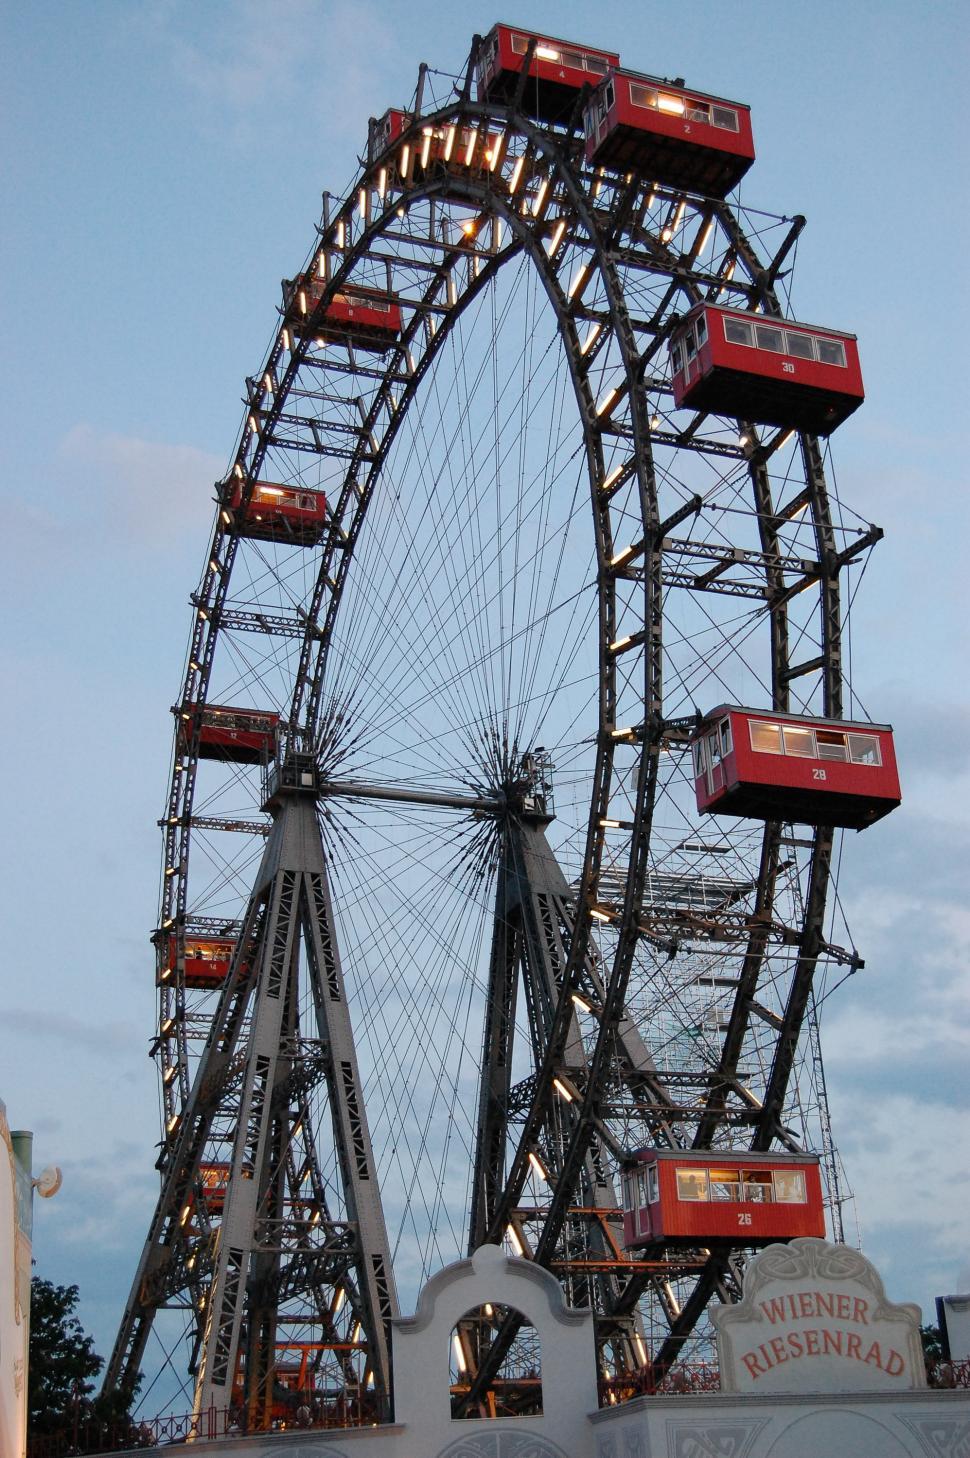 Free Image of Large Ferris Wheel in Park 